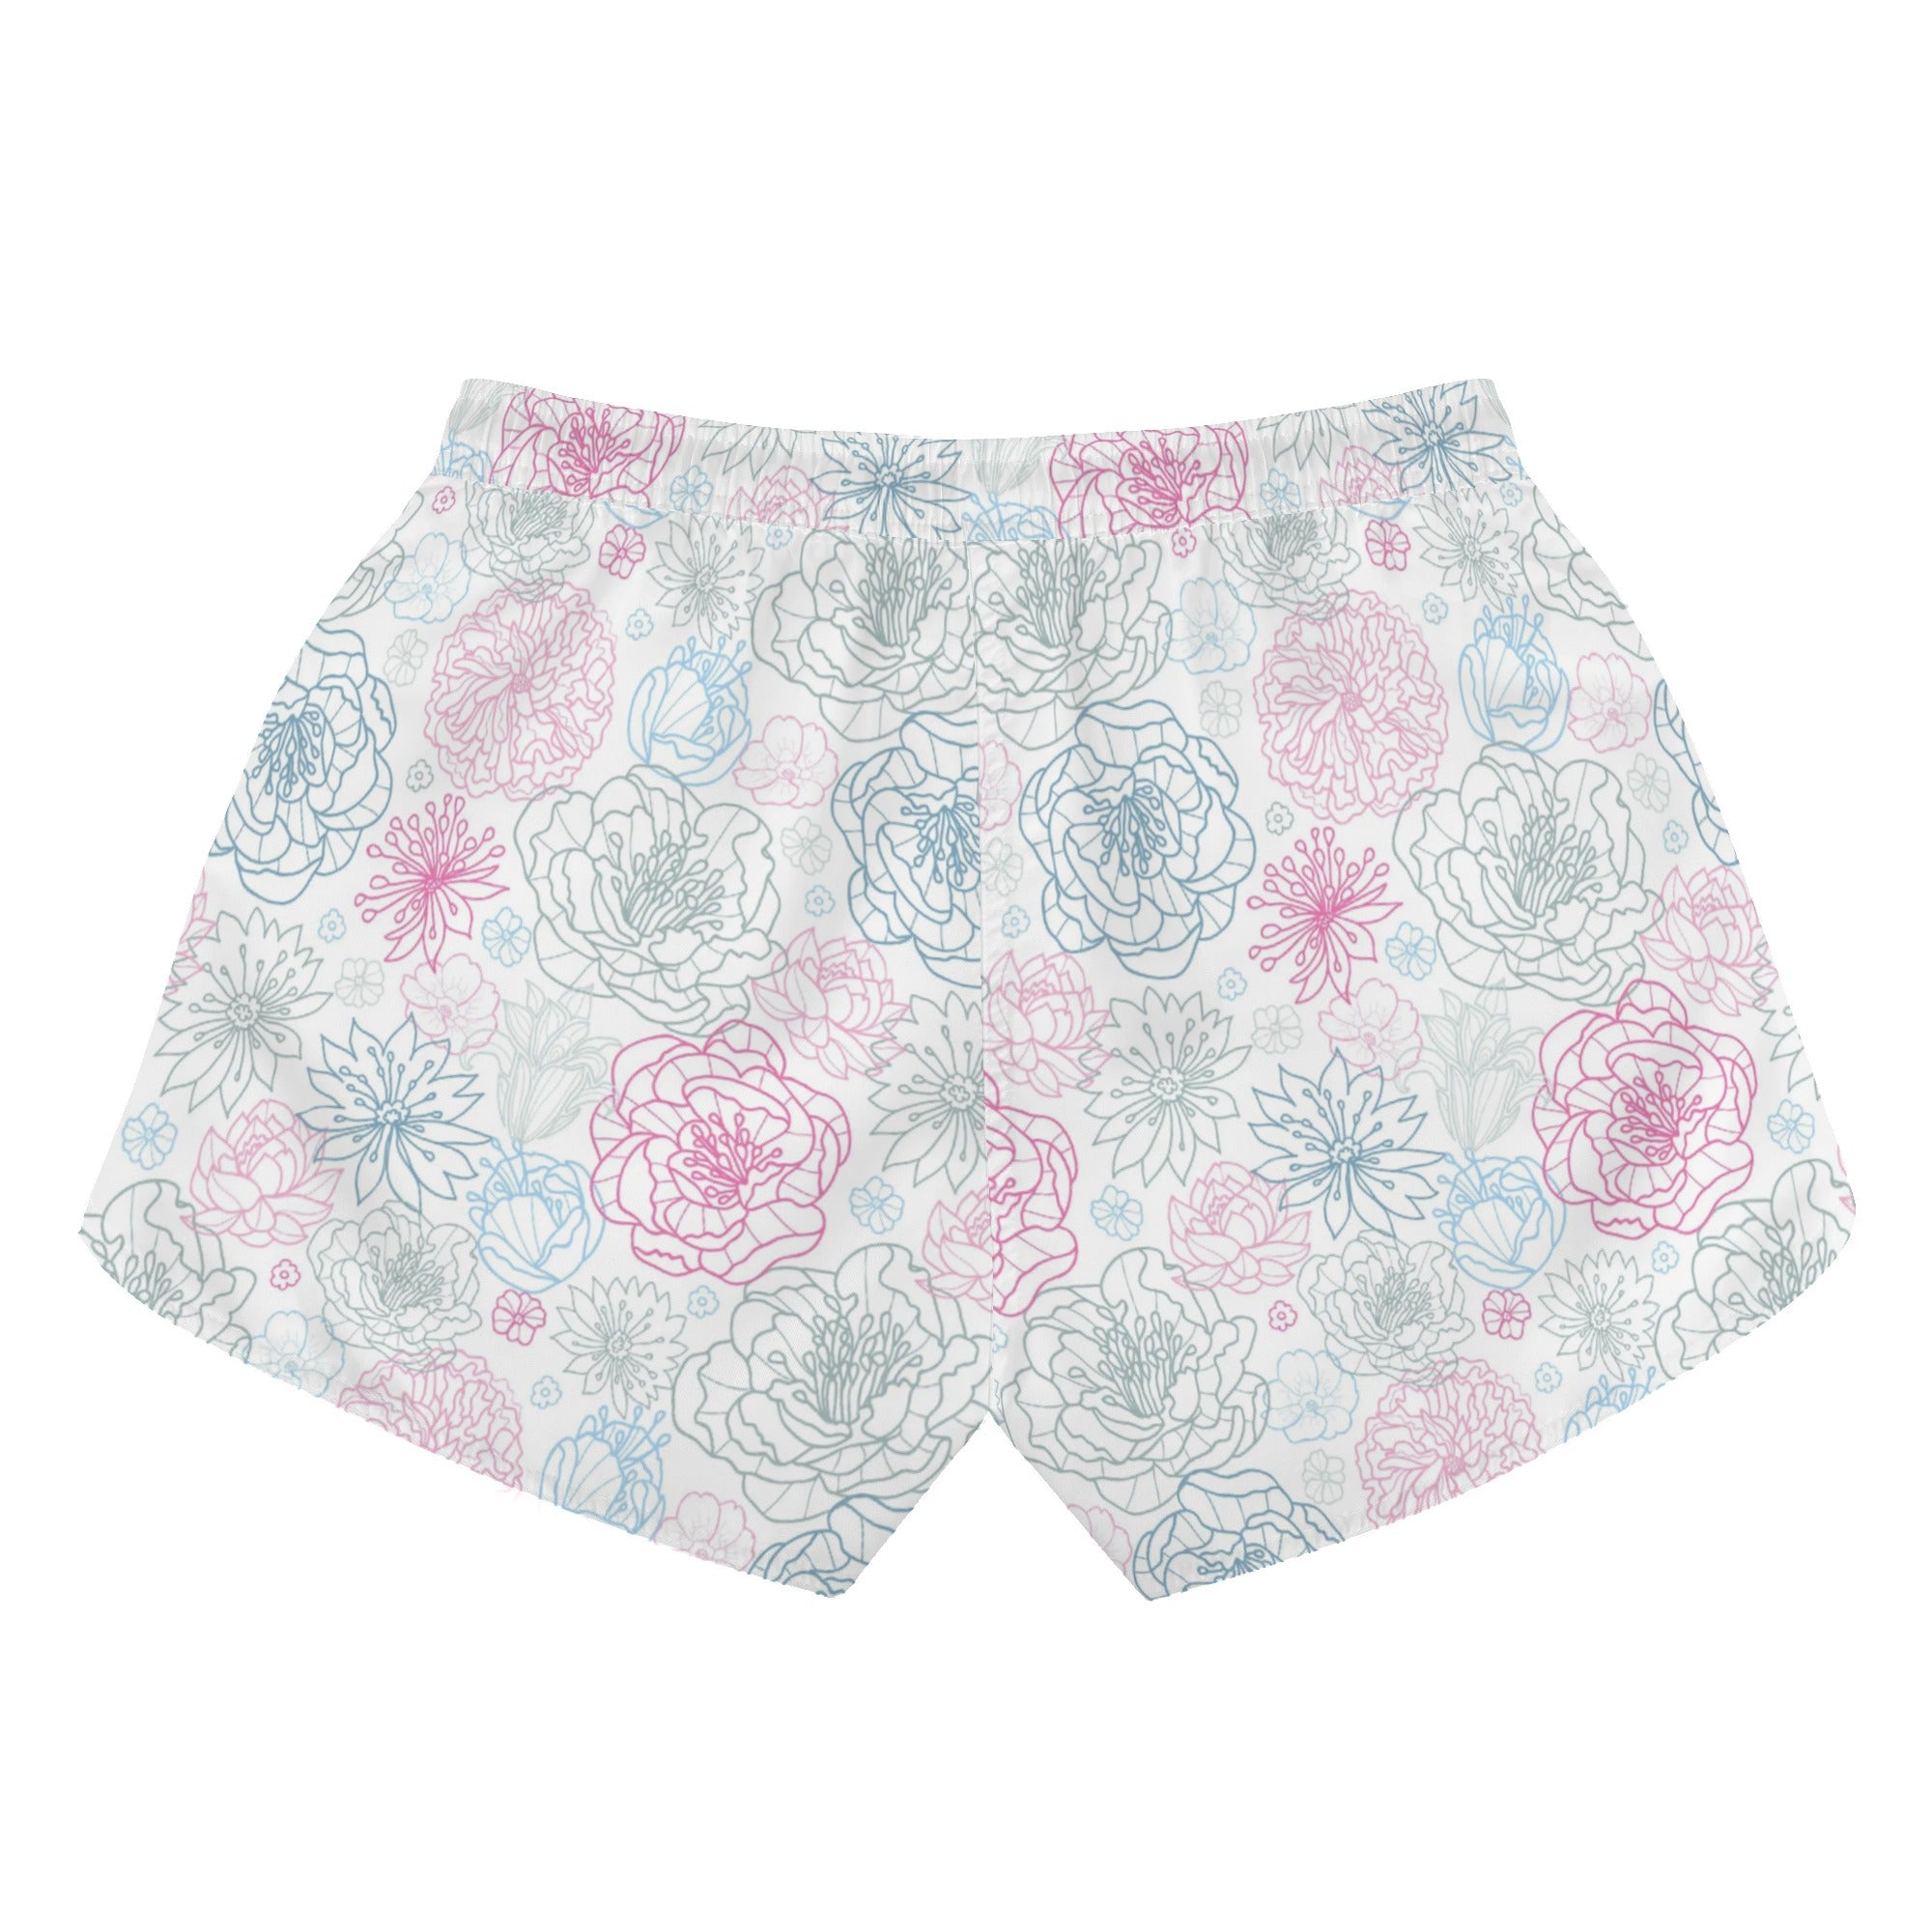 Womens Printed Beach Shorts - Floral Medley